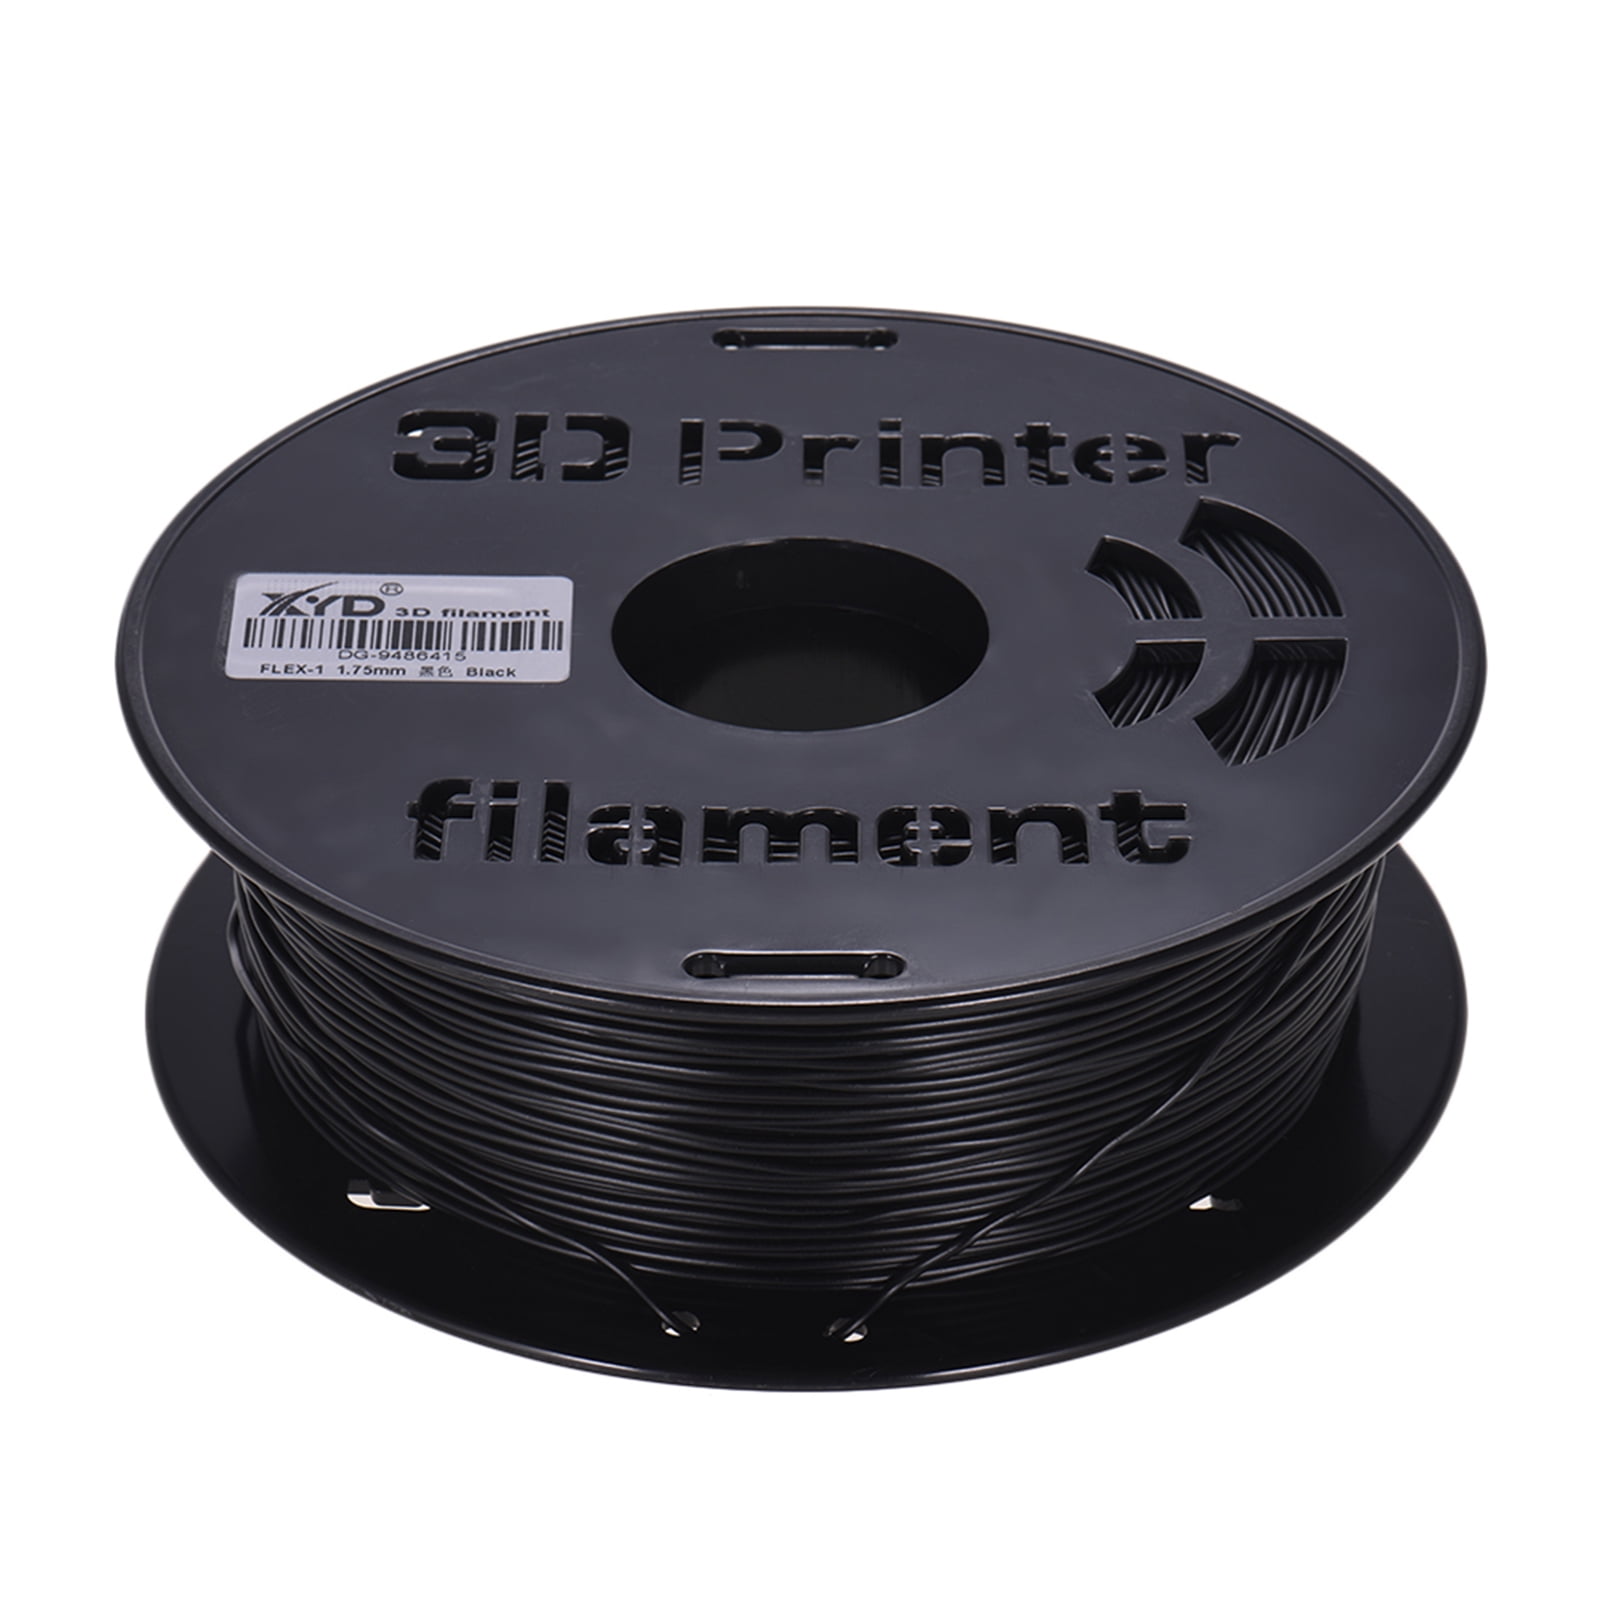 3D Printer Filament Printing Printer PLA+1.75mm Roll 1KG Spool Accuracy Makerbot 